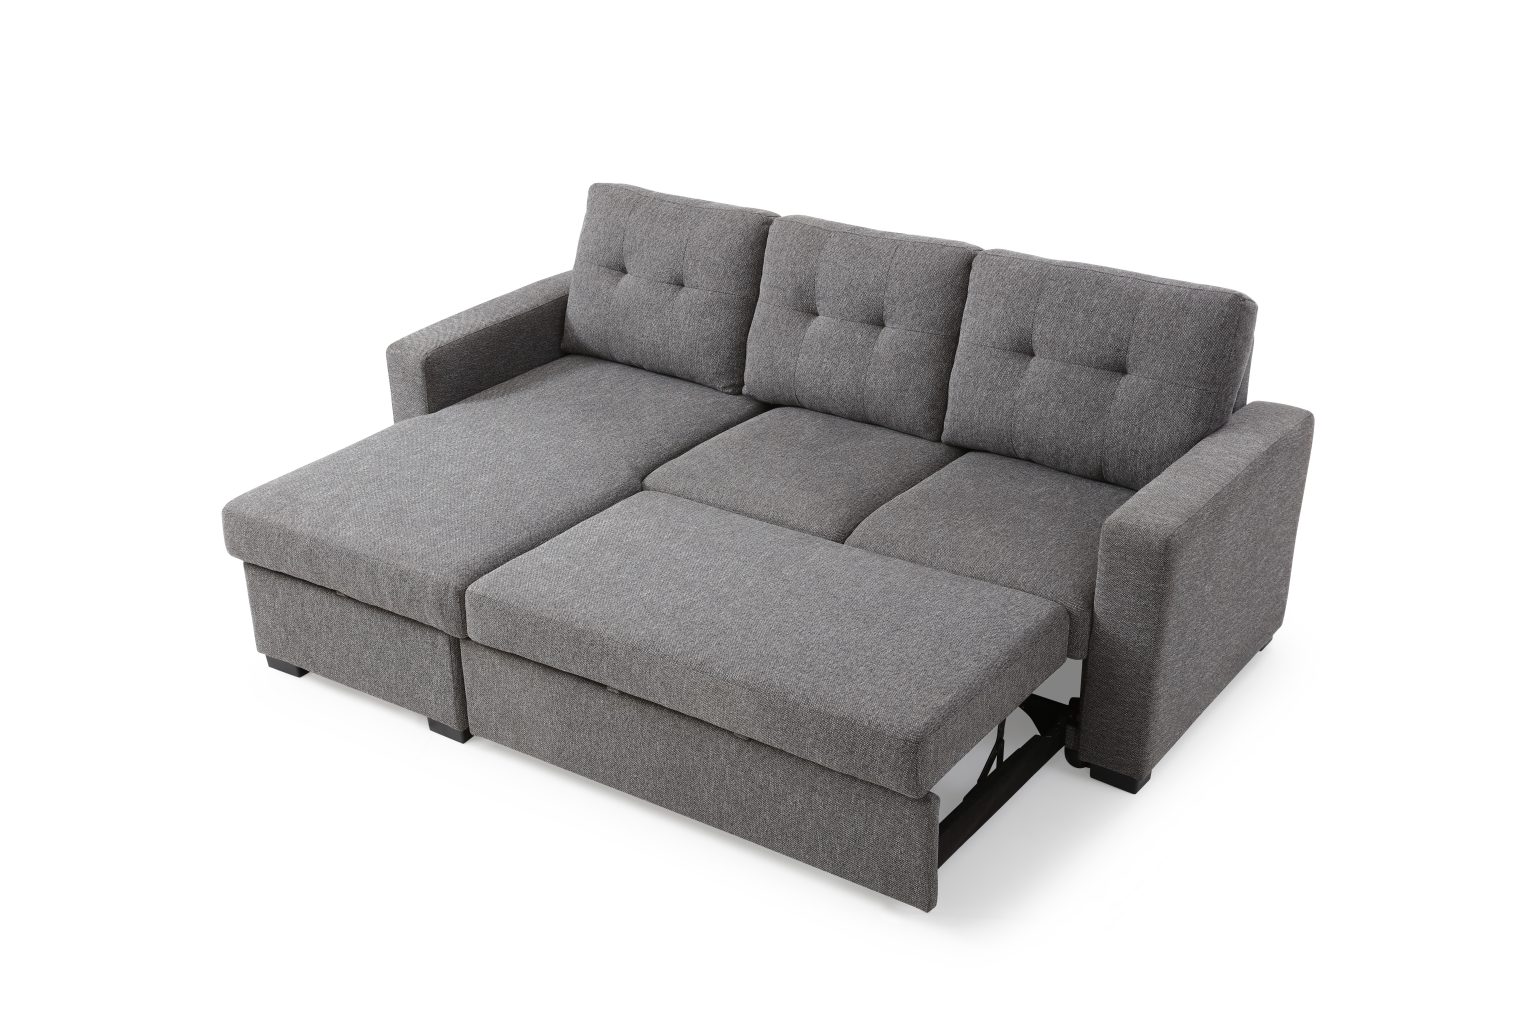 cheap contemporary sofa beds uk